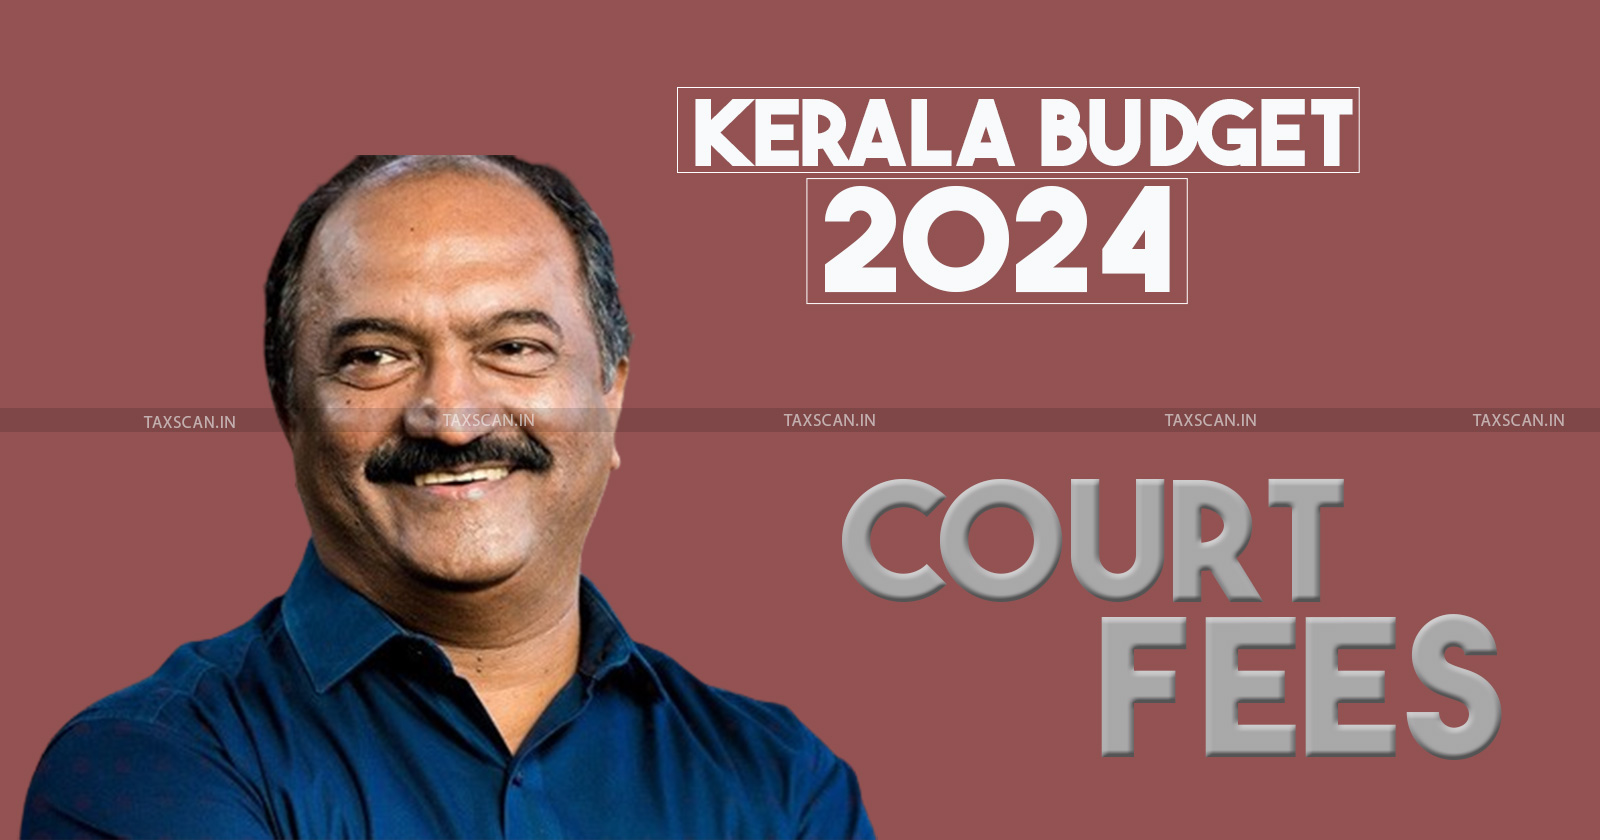 Kerala Budget 2024 - Kerala State Budget 2024 - Court fees increase - Finance Minister K N Balagopal - Kerala economy - taxscan